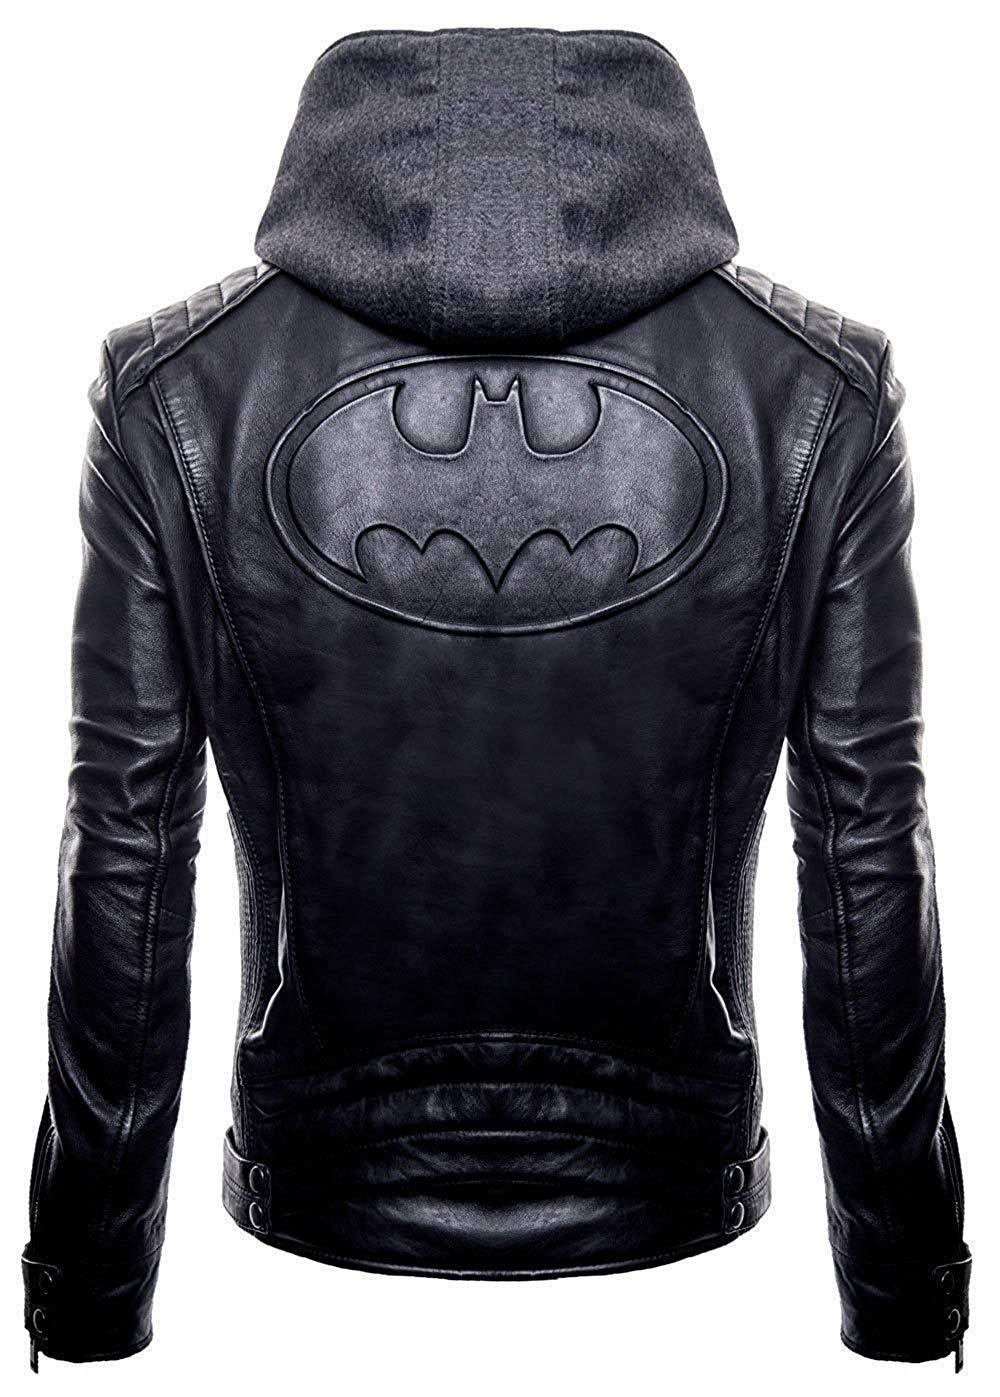 Batman Logo Motorcycle Jacket Leather 